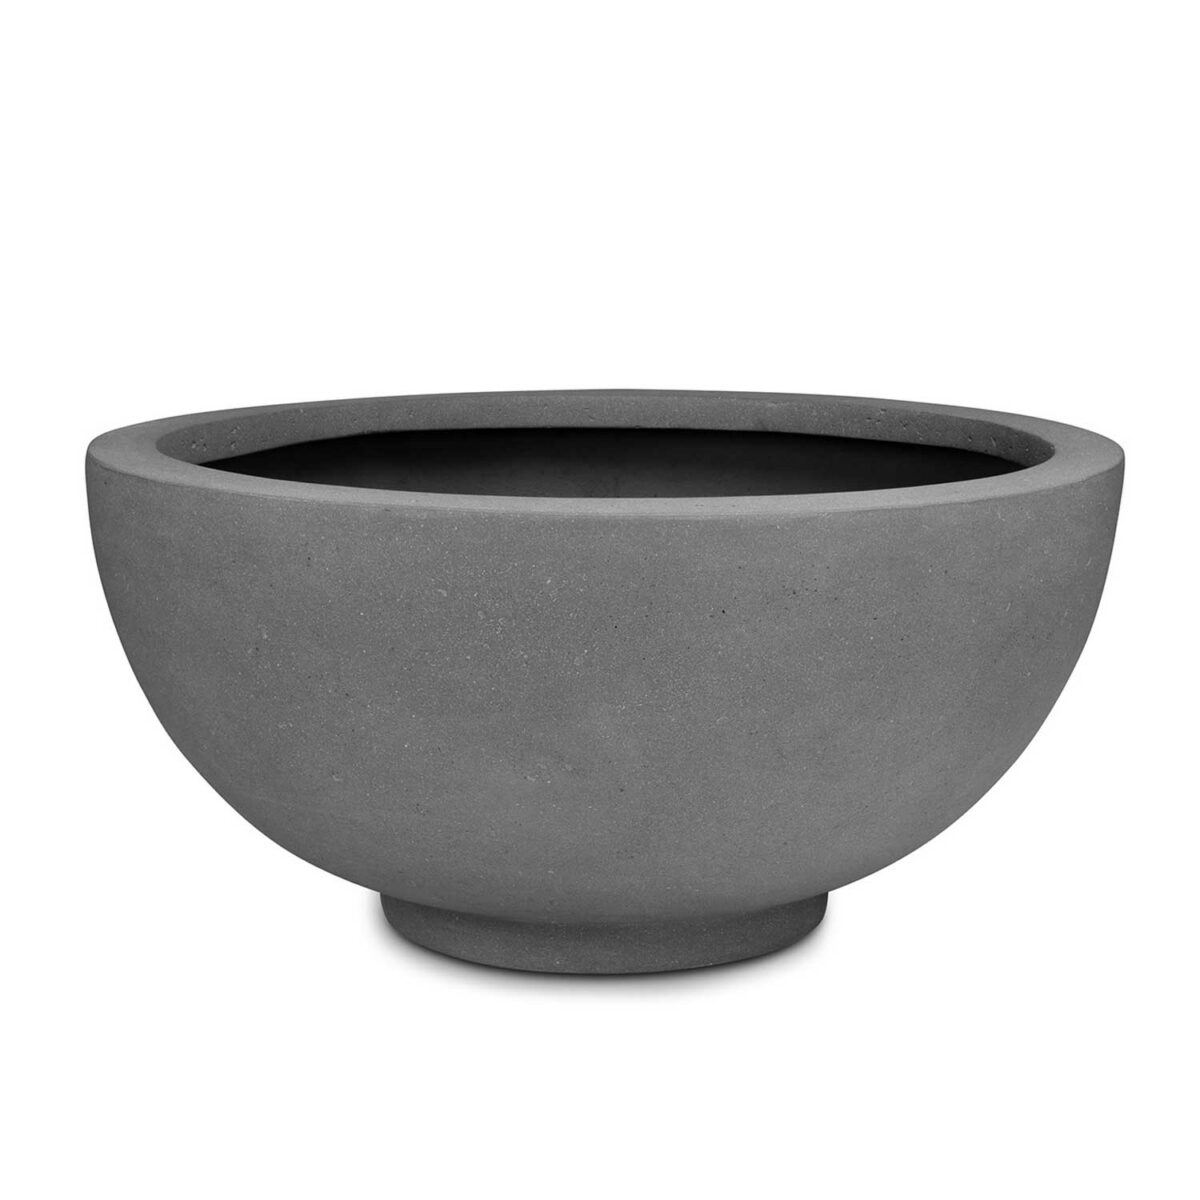 PLUS planter bowl gray